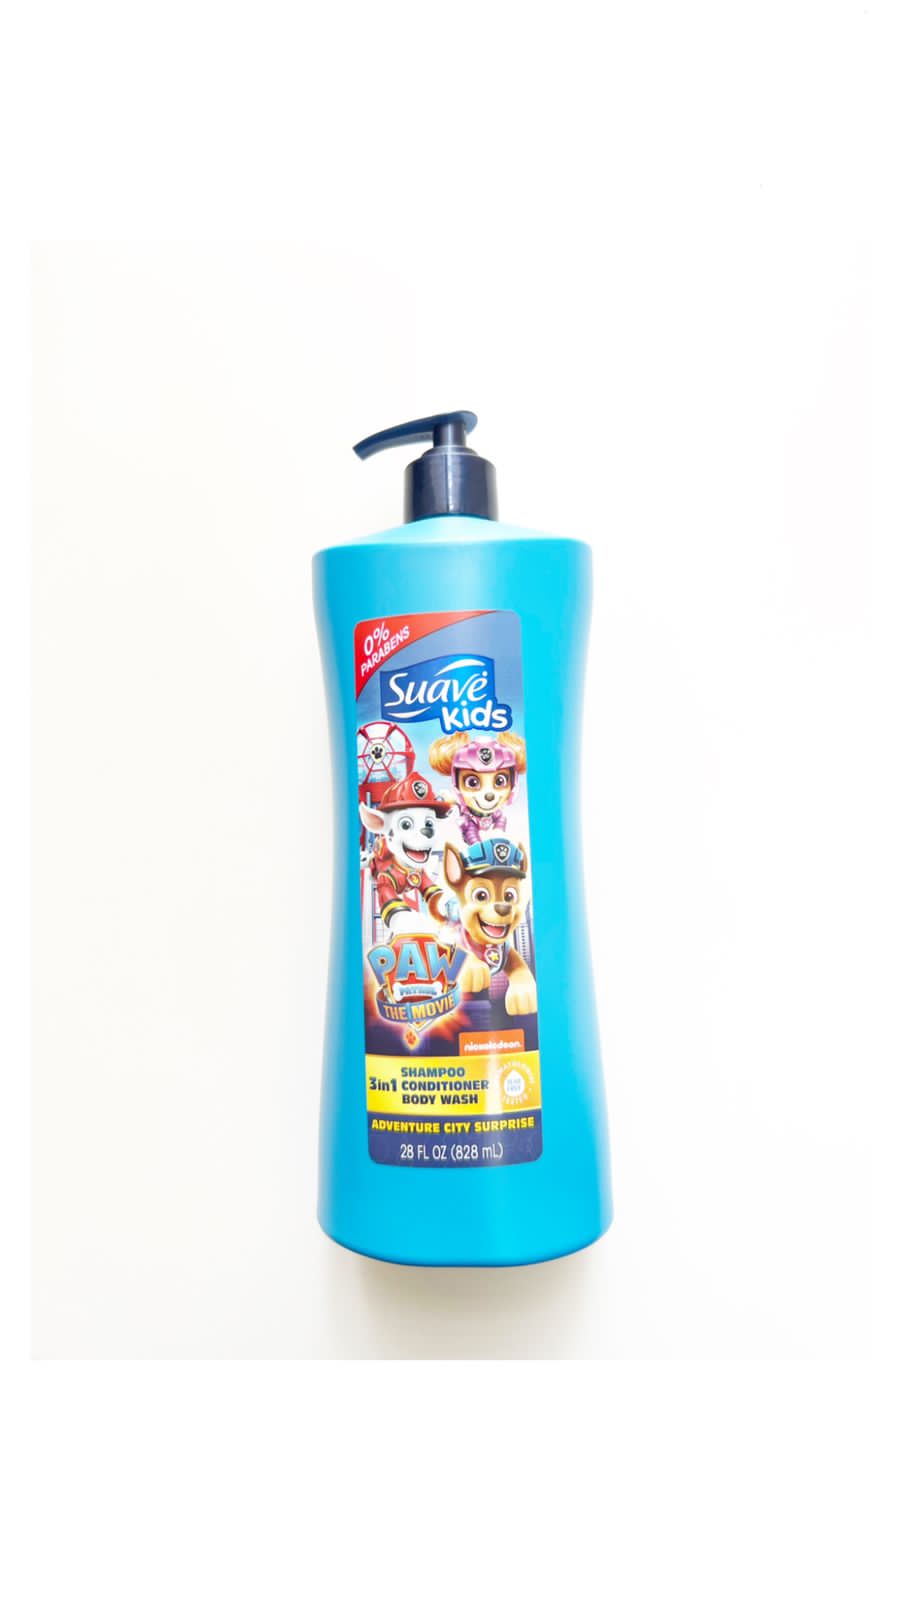 3 in 1 Shampoo Conditioner & Body Wash Adventure City Surprise - 828ml